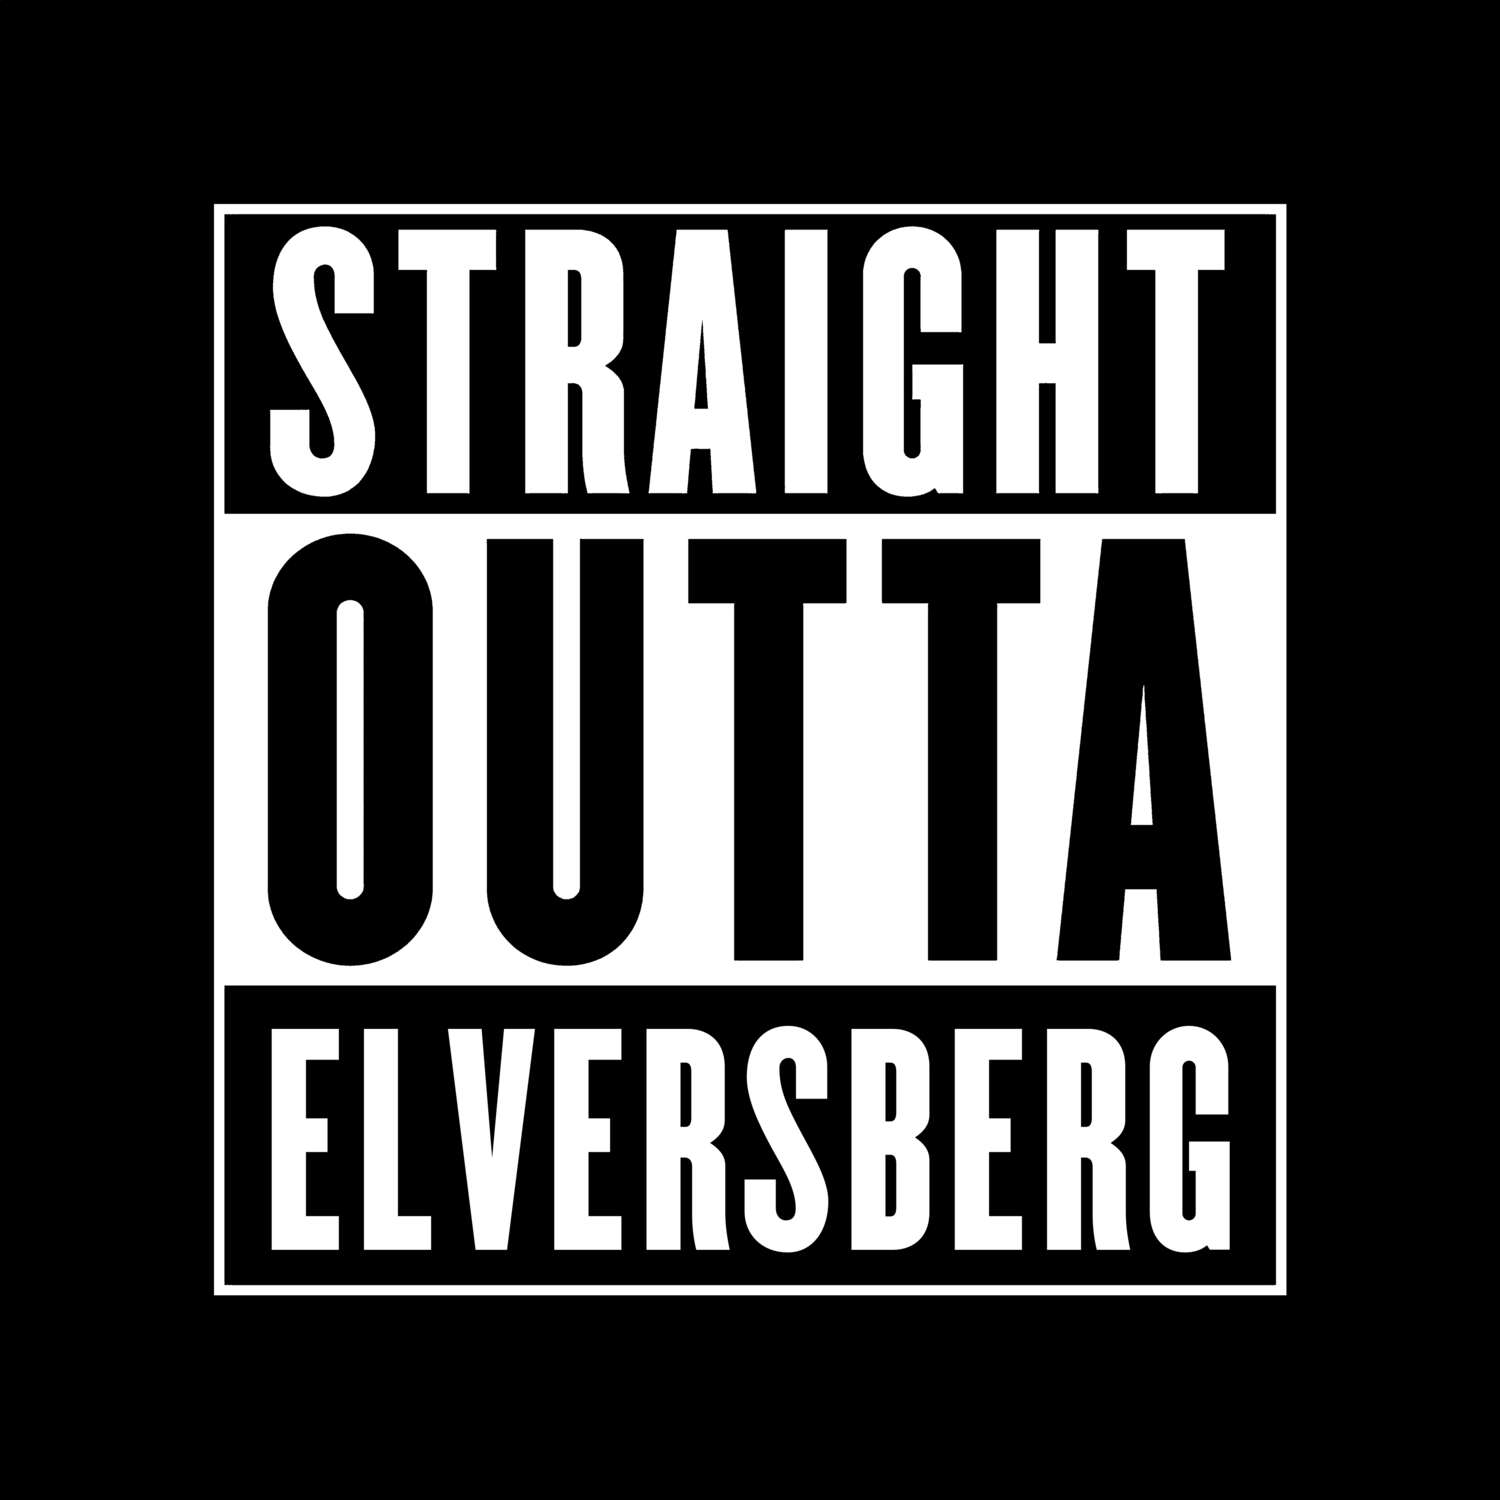 Elversberg T-Shirt »Straight Outta«